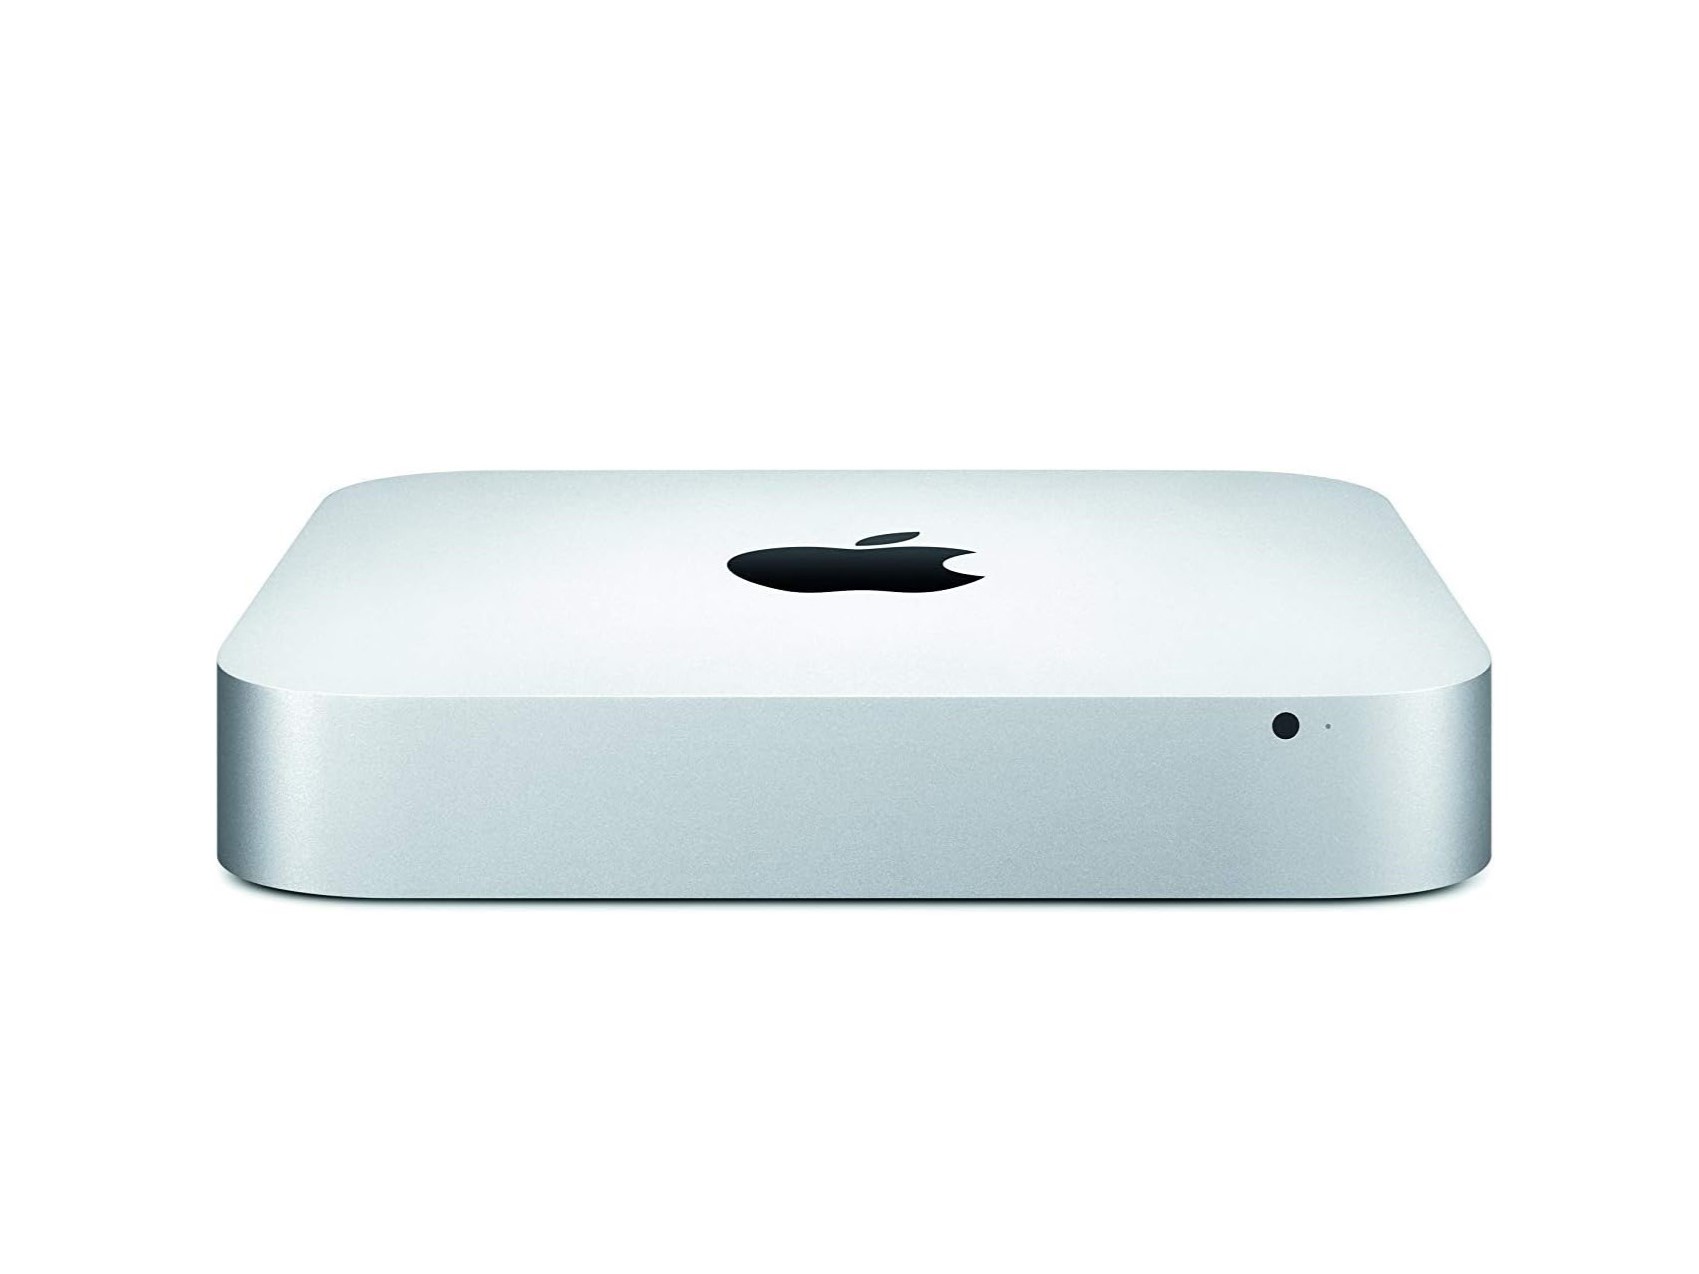 Best Mac Mini deals 2023: Save $100 on renewed Apple desktop